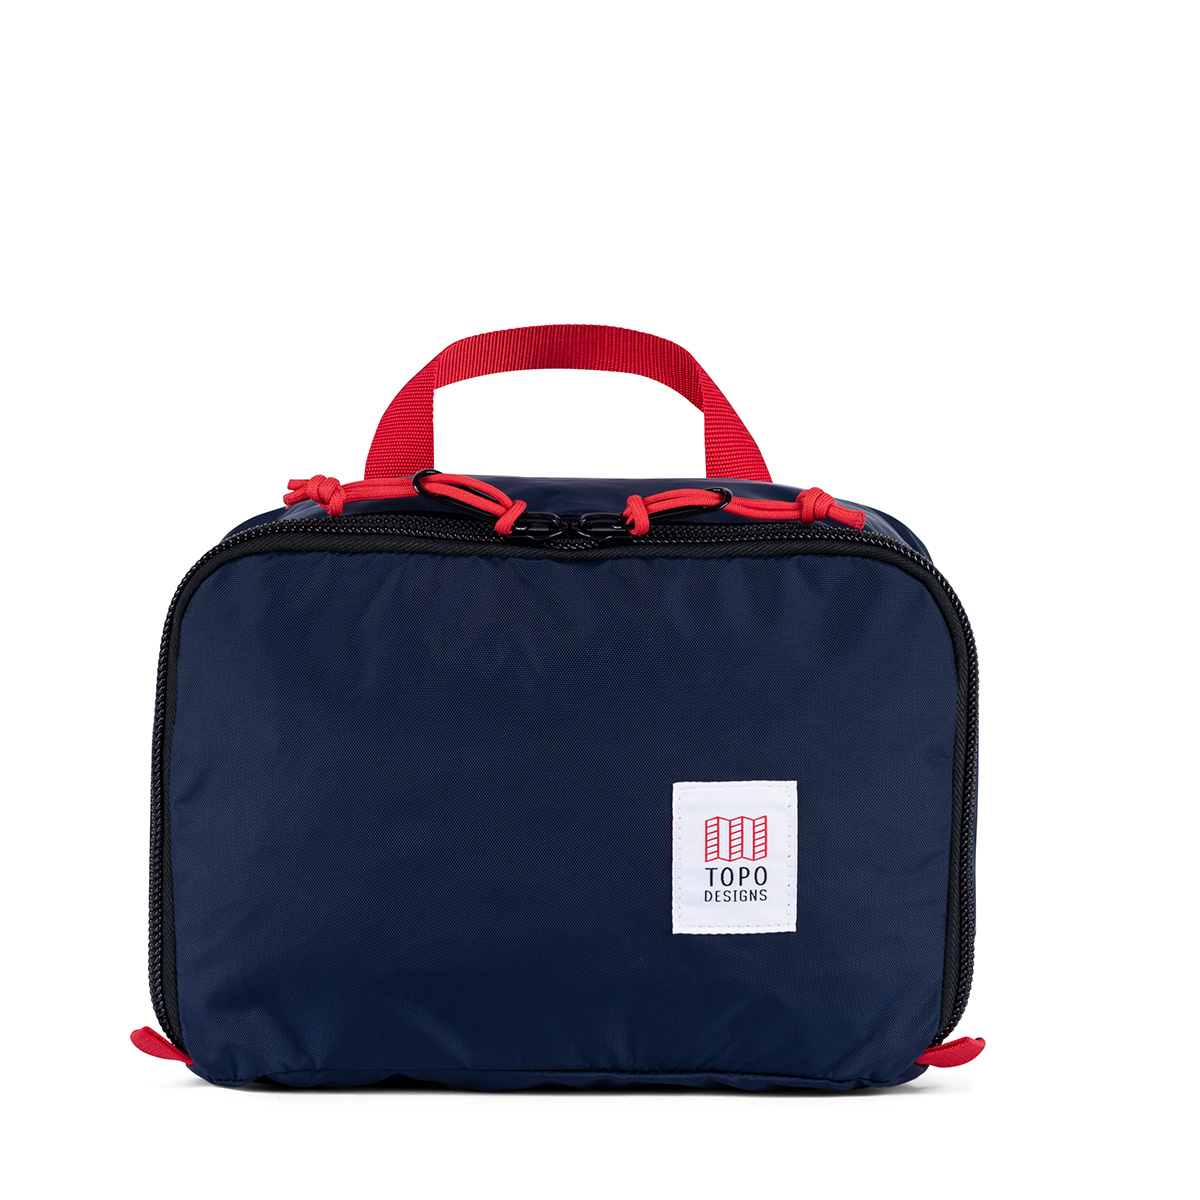 Topo Designs Pack Bag 10L Cube Navy, het optimaliseren van je bagage is nog nooit zo eenvoudig geweest